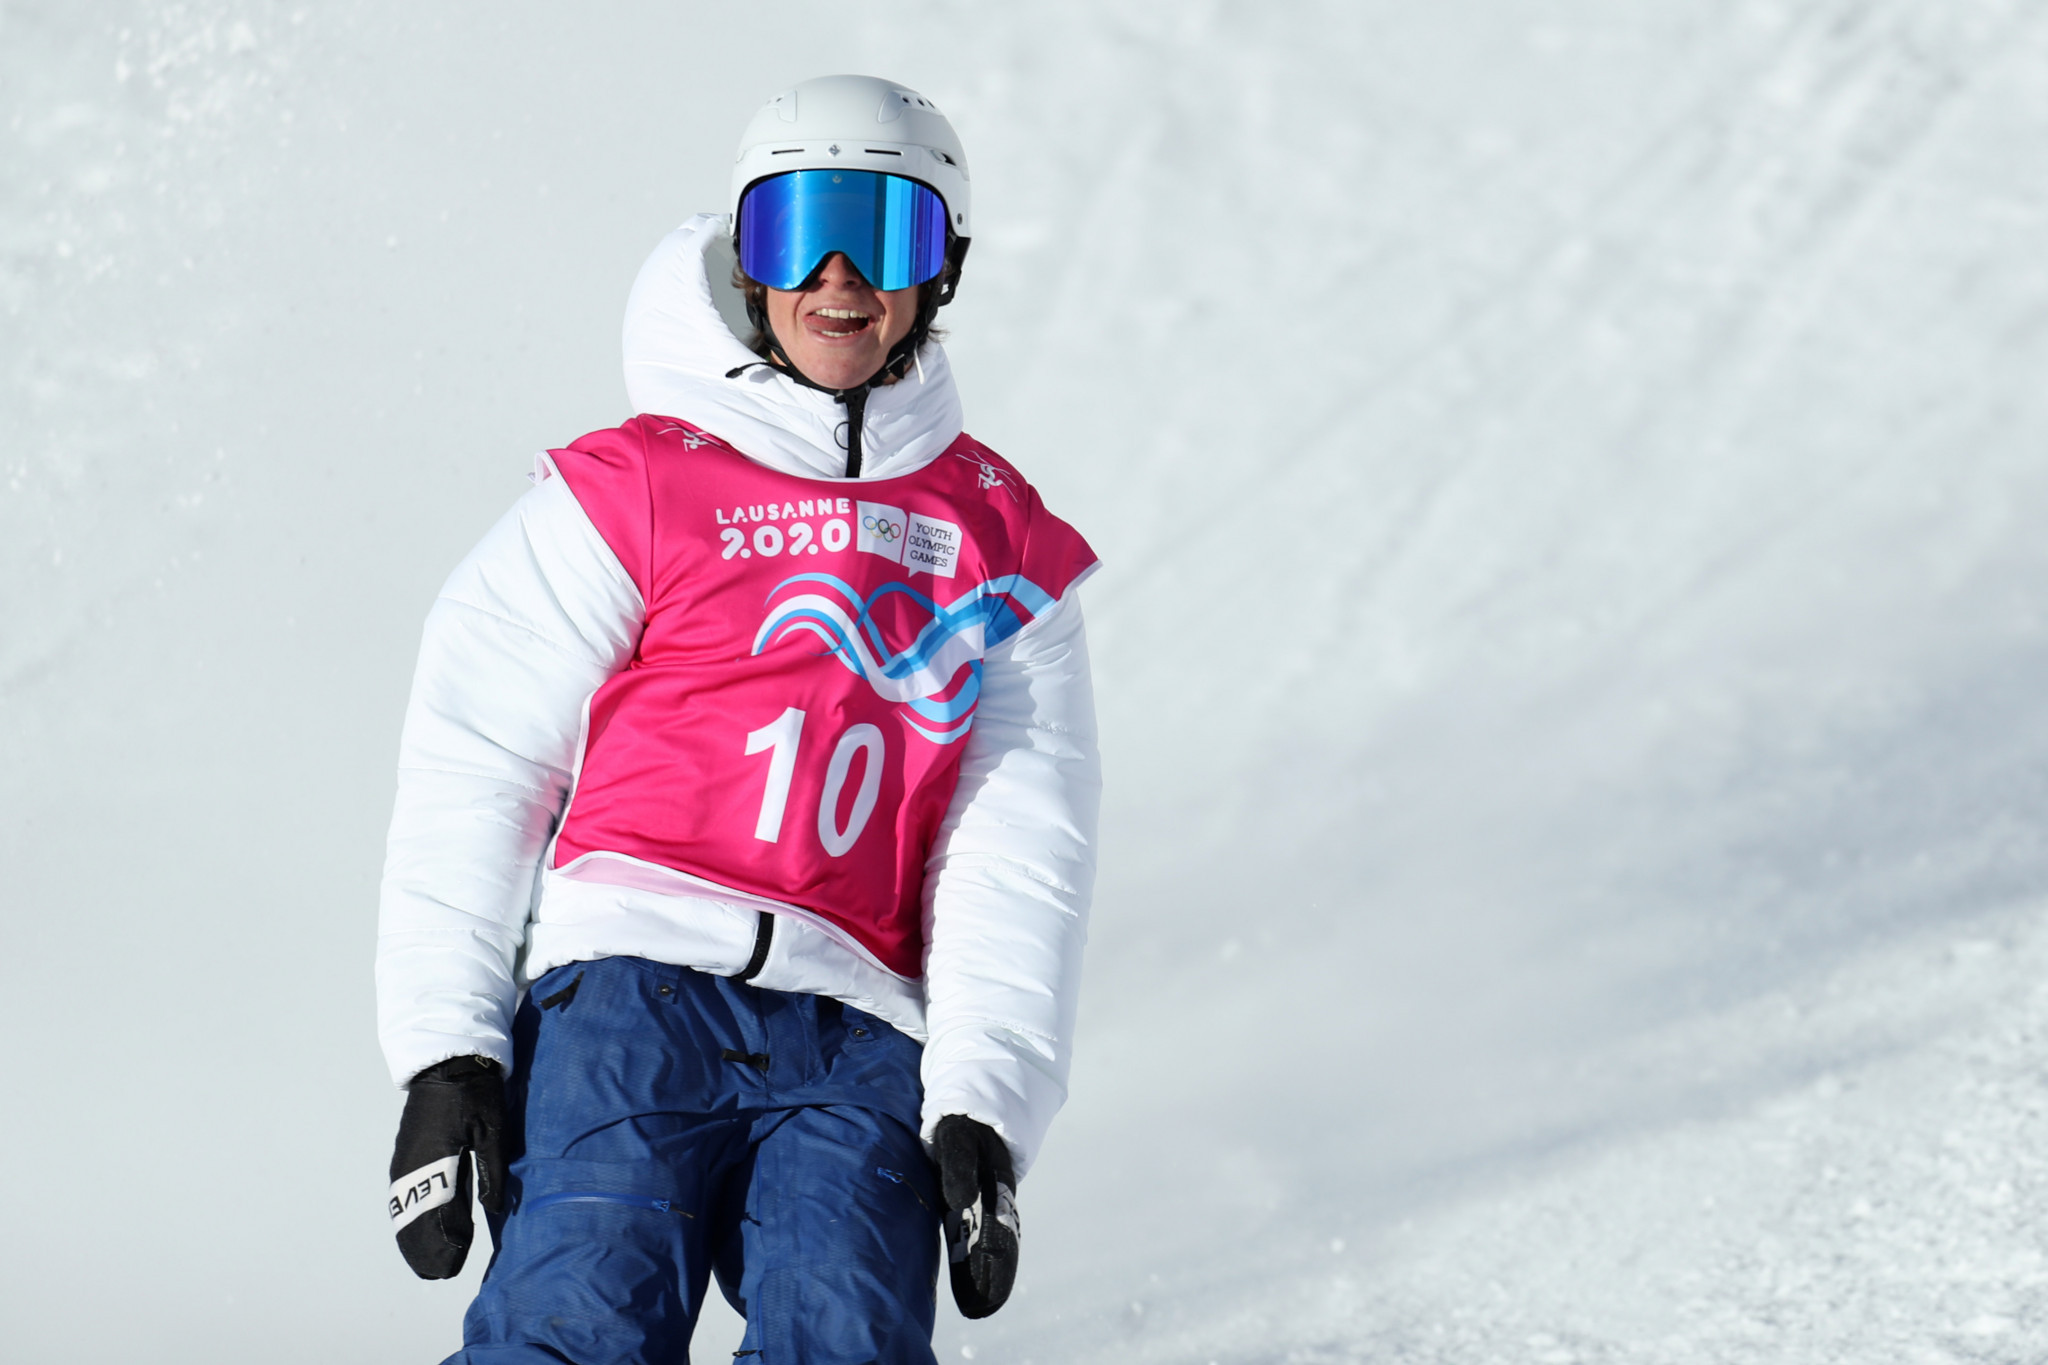 Matej Svancer a dominé les qualifications masculines en slopestyle freeski © Getty Images